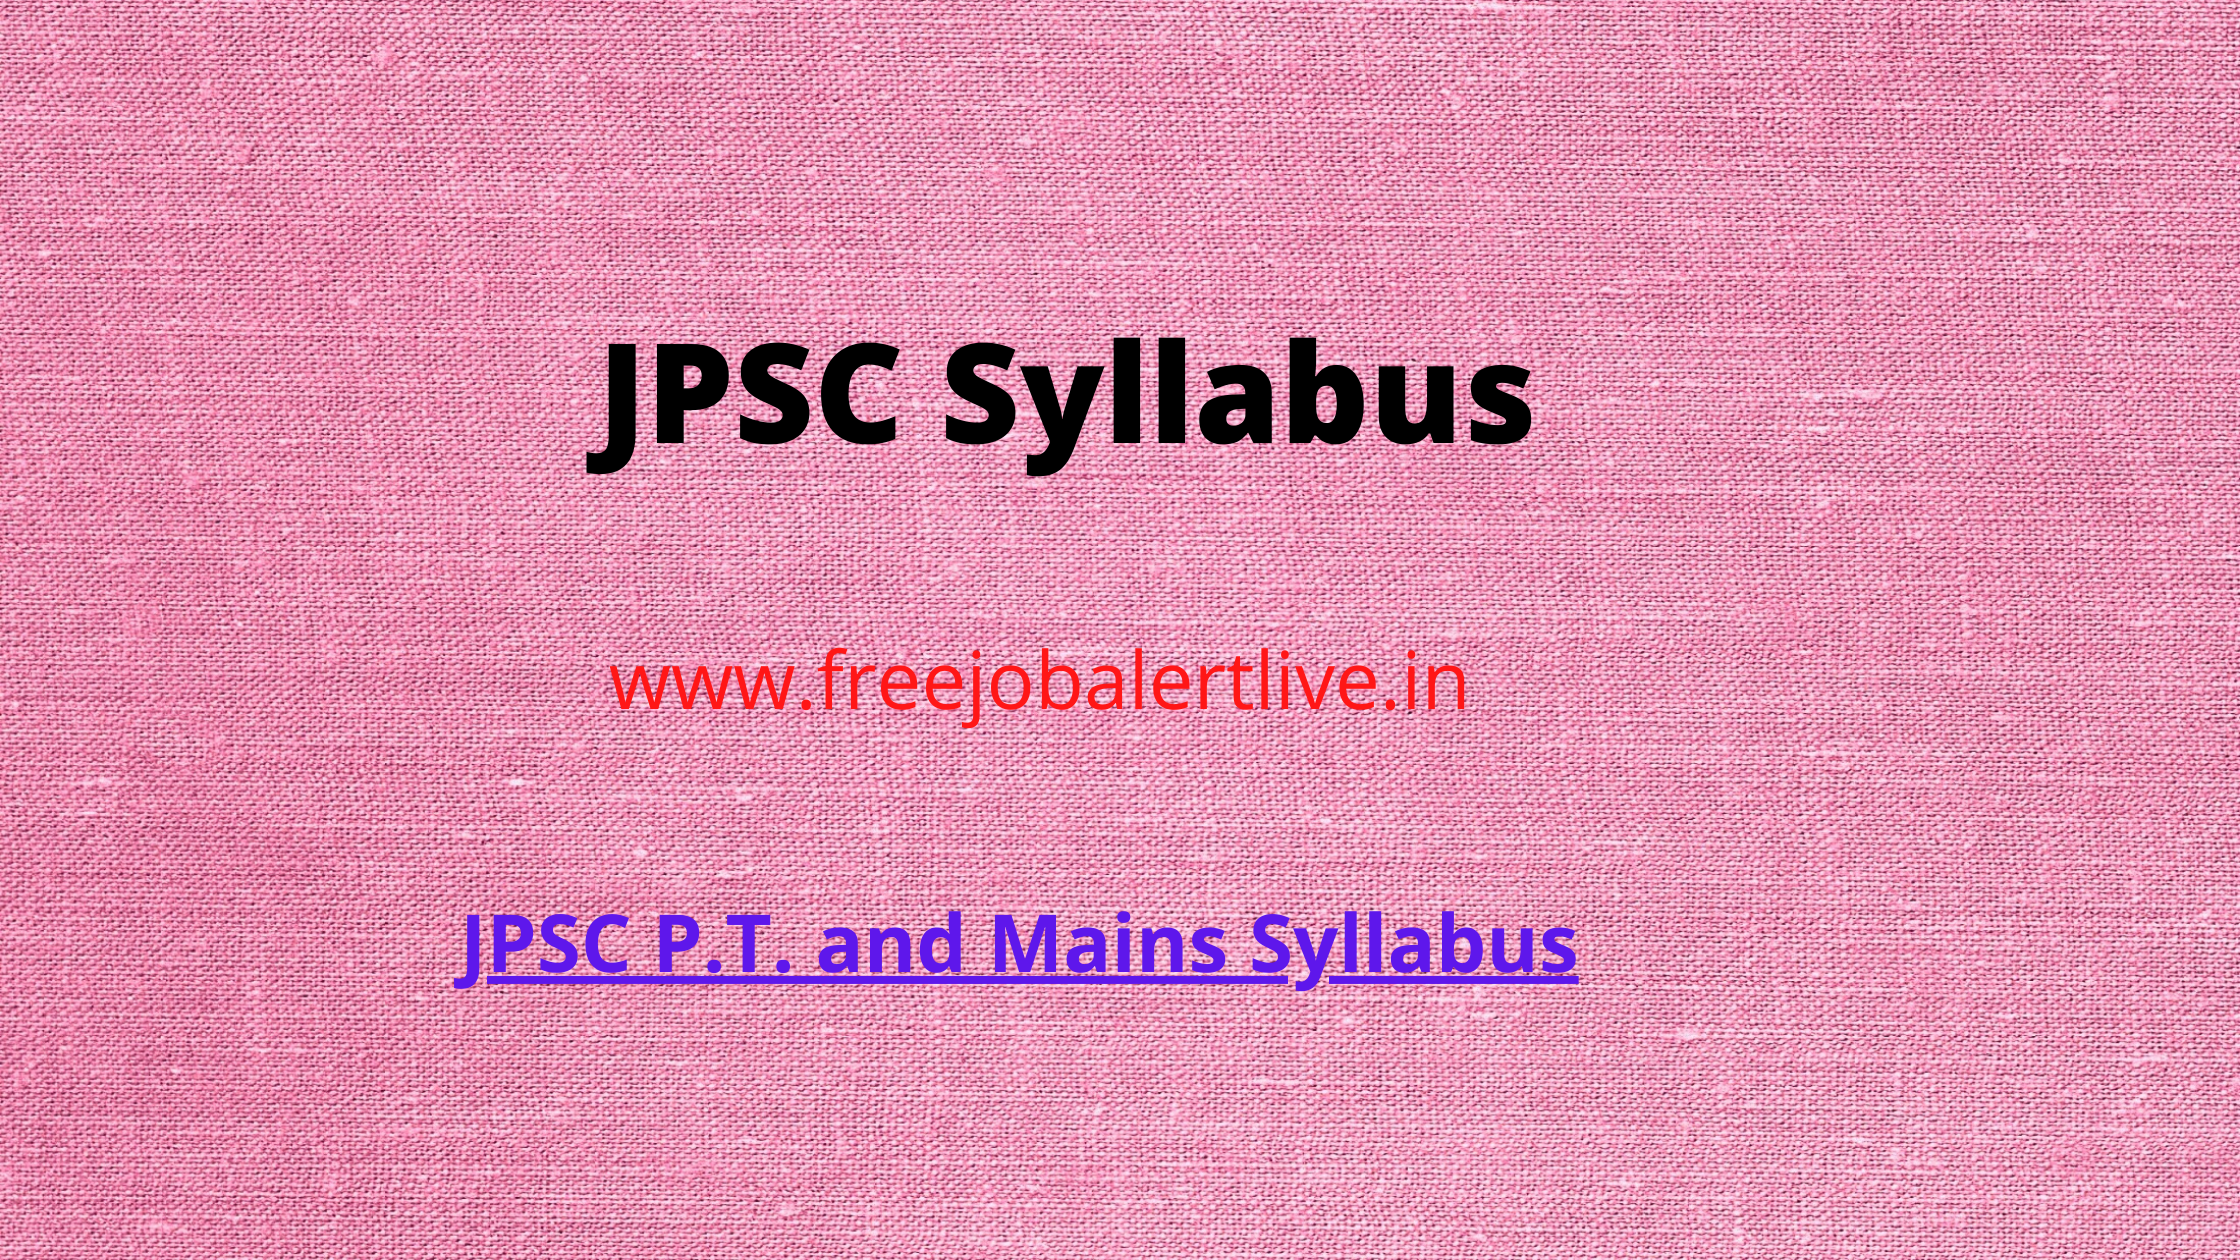 JPSC Syllabus 